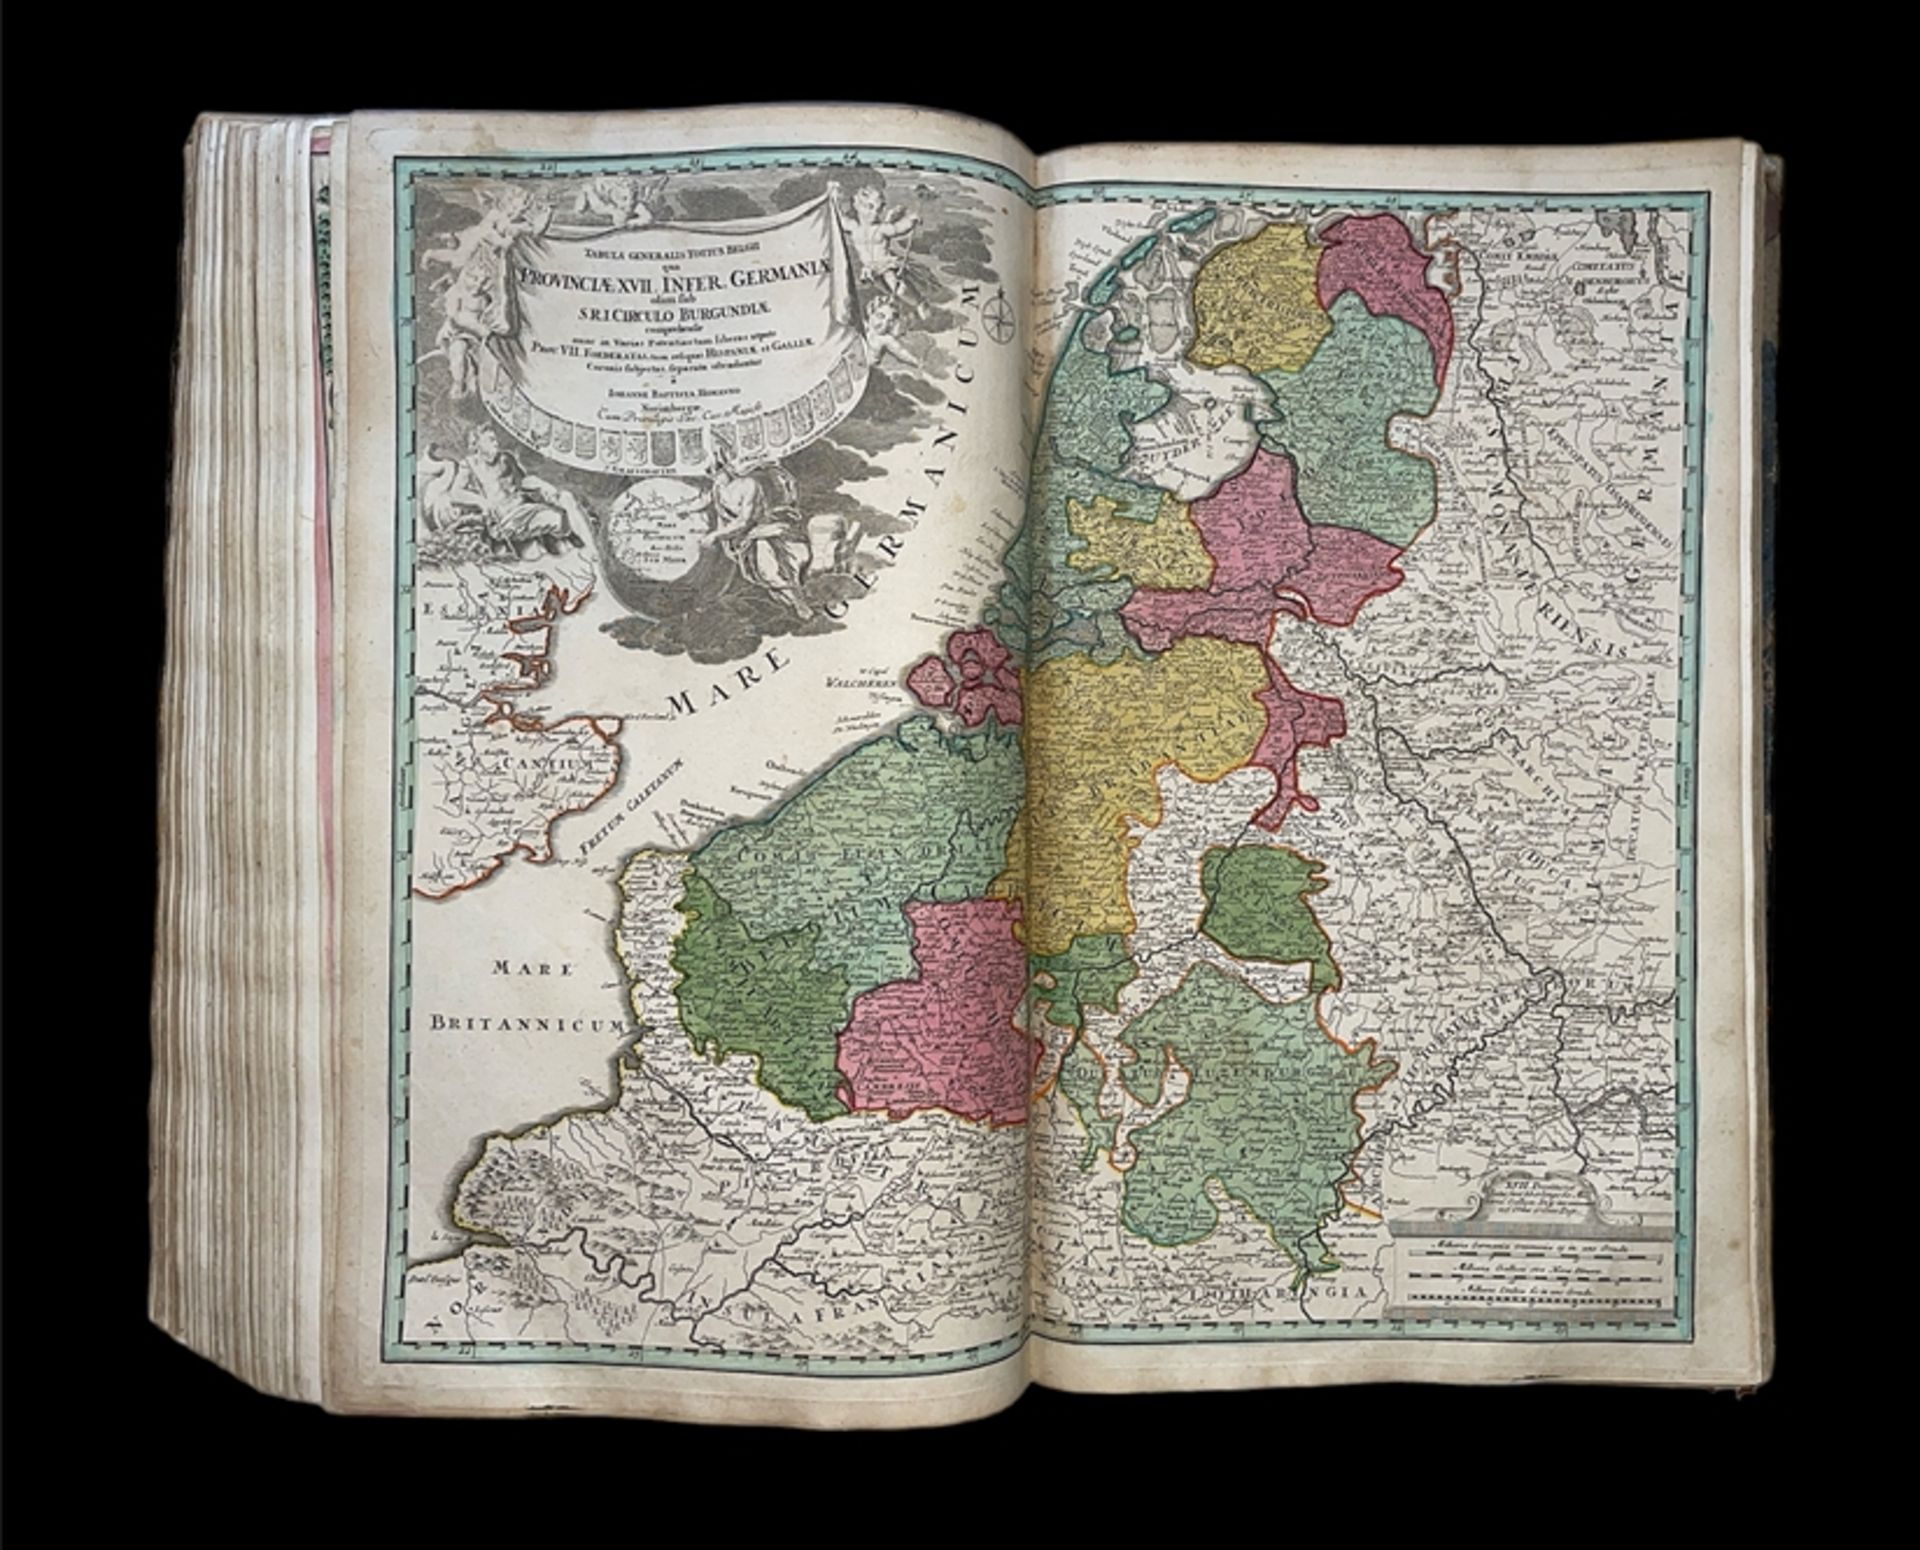 J.B. HOMANN "Neuer Atlas über die gantze Welt" (Nürnberg, 1712) - Image 40 of 125